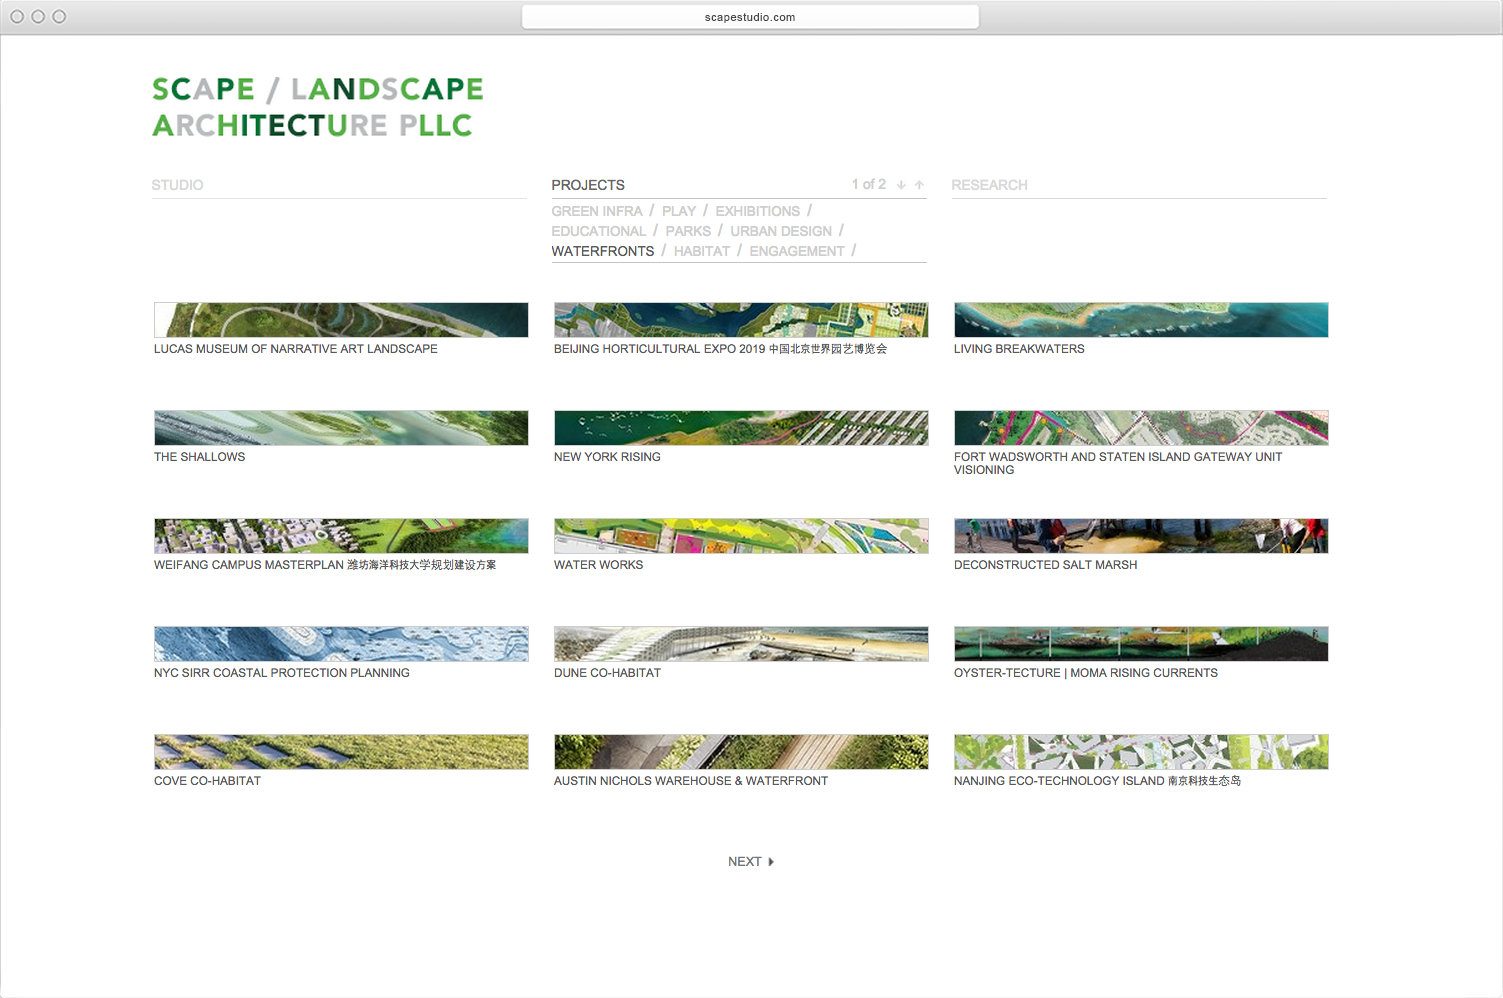 SCAPE / Landscape Architecture, PLLC  - MTWTF